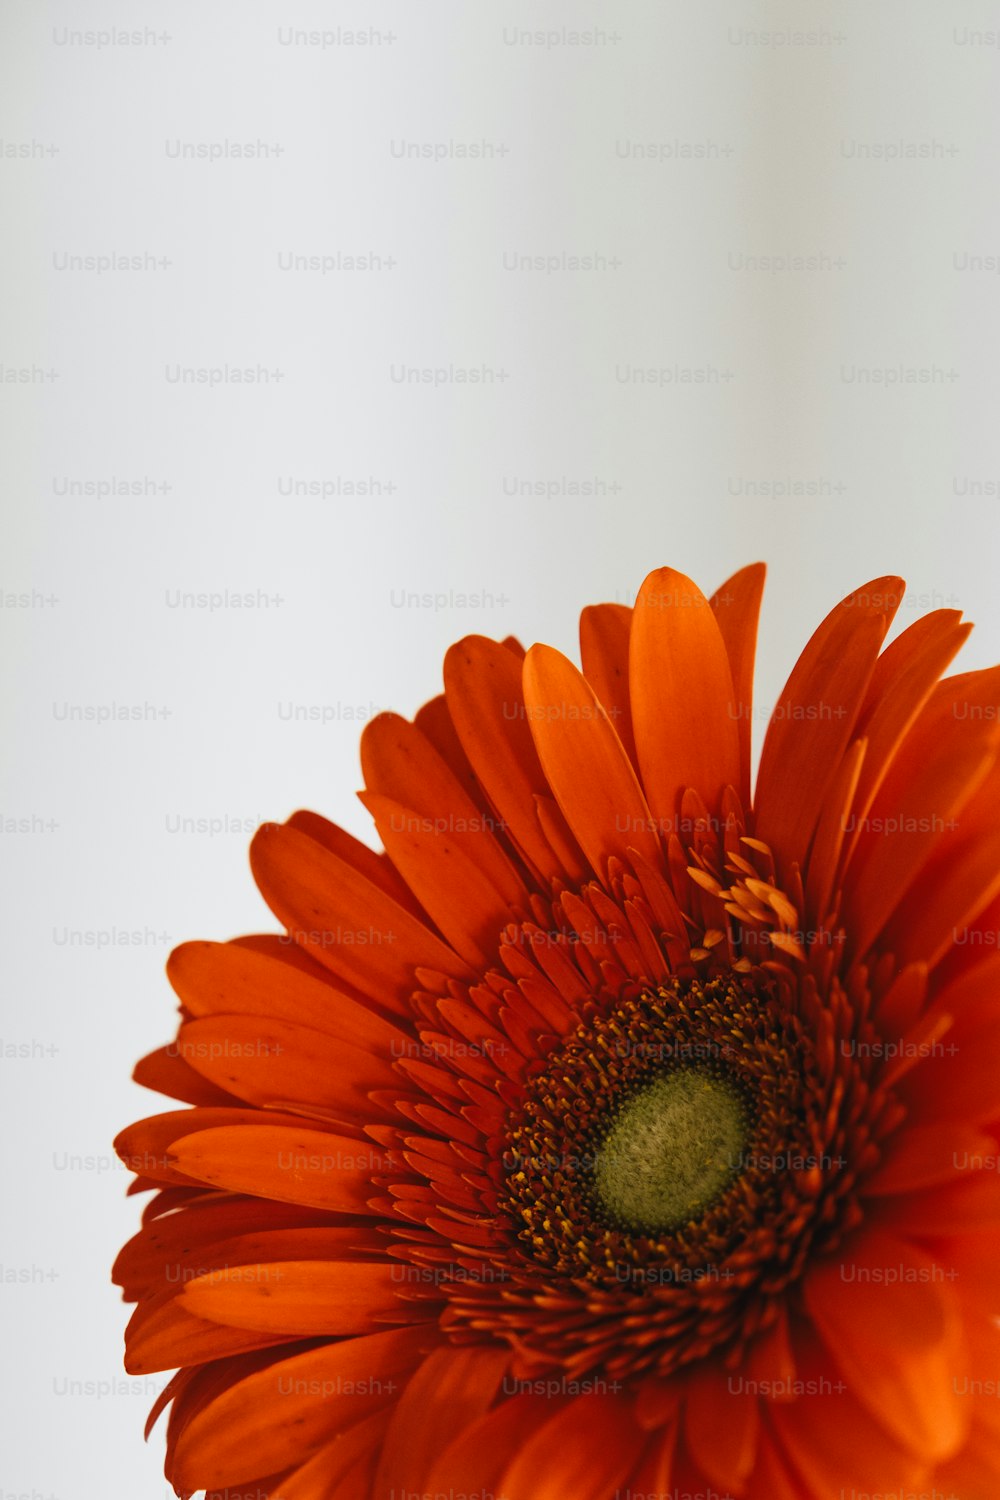 a close up of a bright orange flower